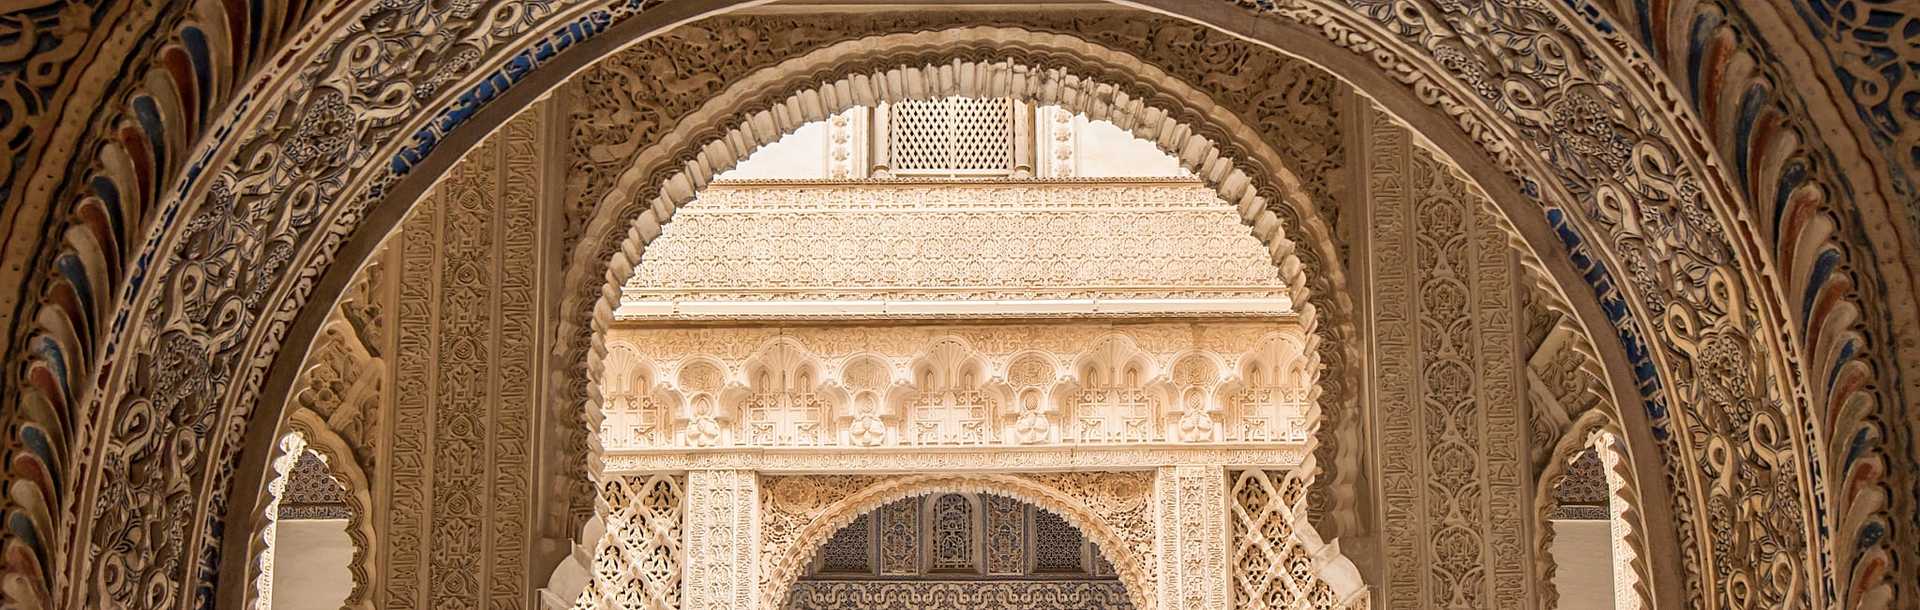 Detail of Moorish architecture in Seville Spain